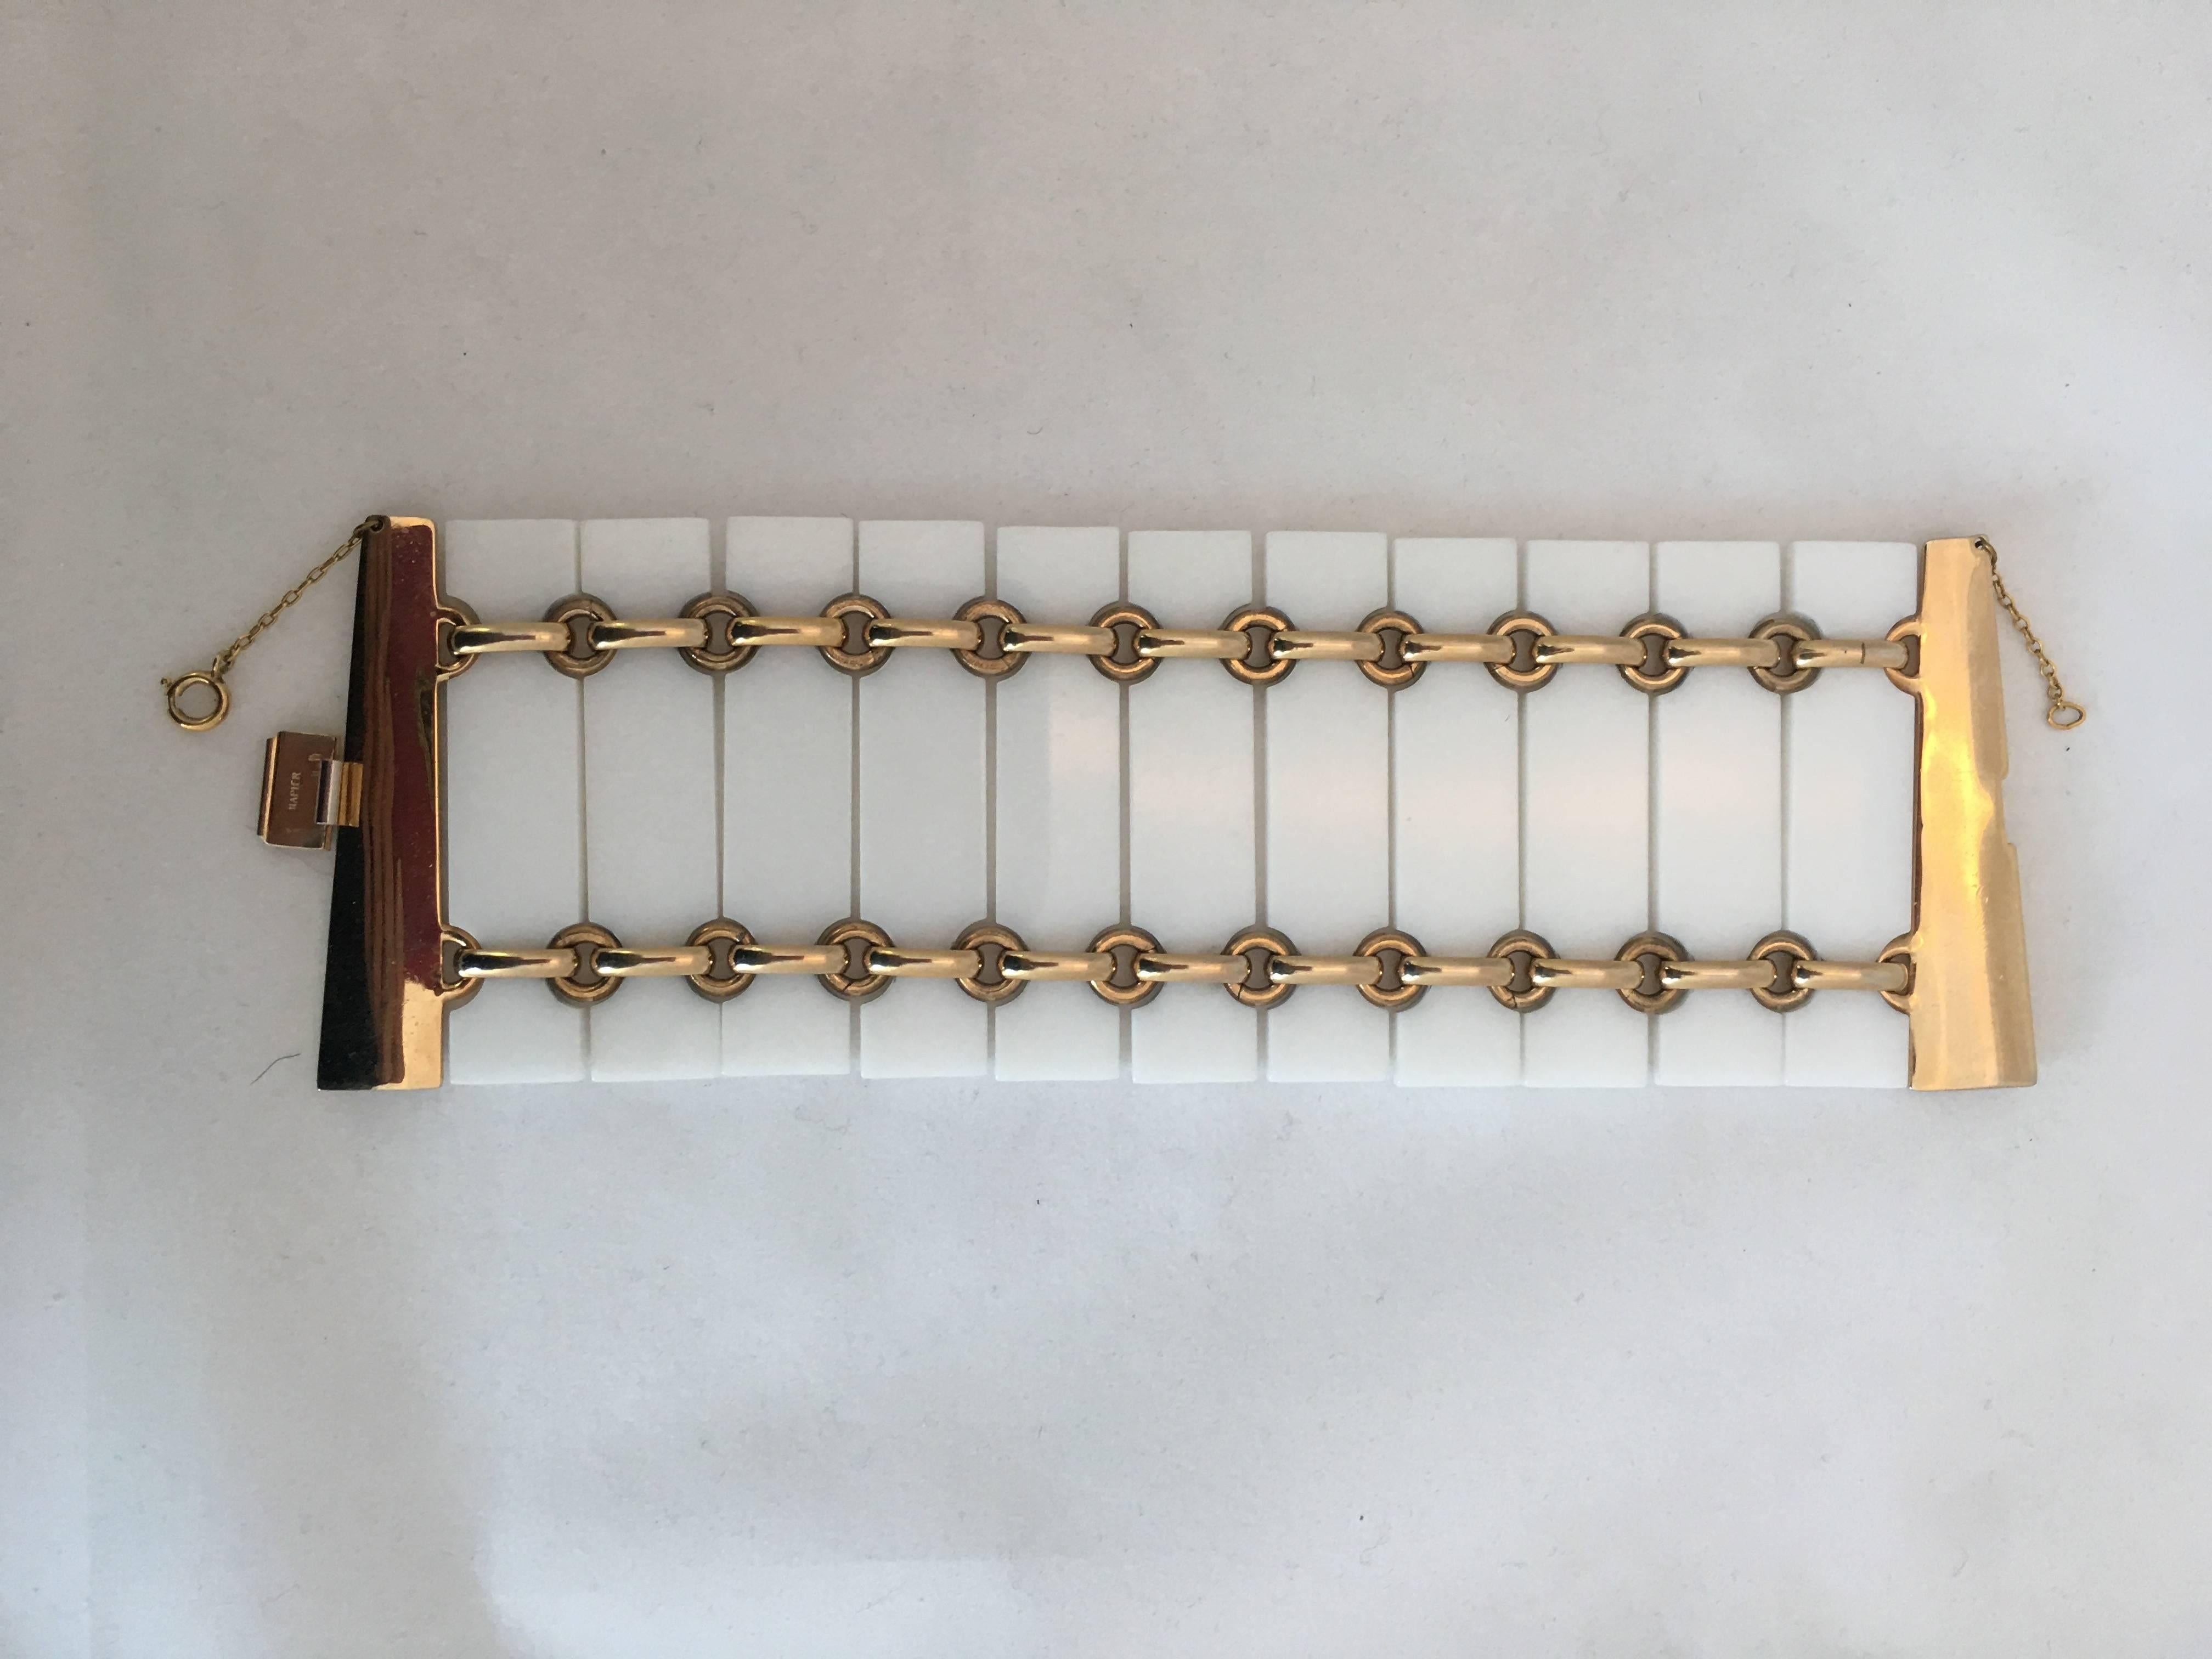  Napier 1980's White Acrylic & Gold Tone Link Bracelet

Length: 7.75